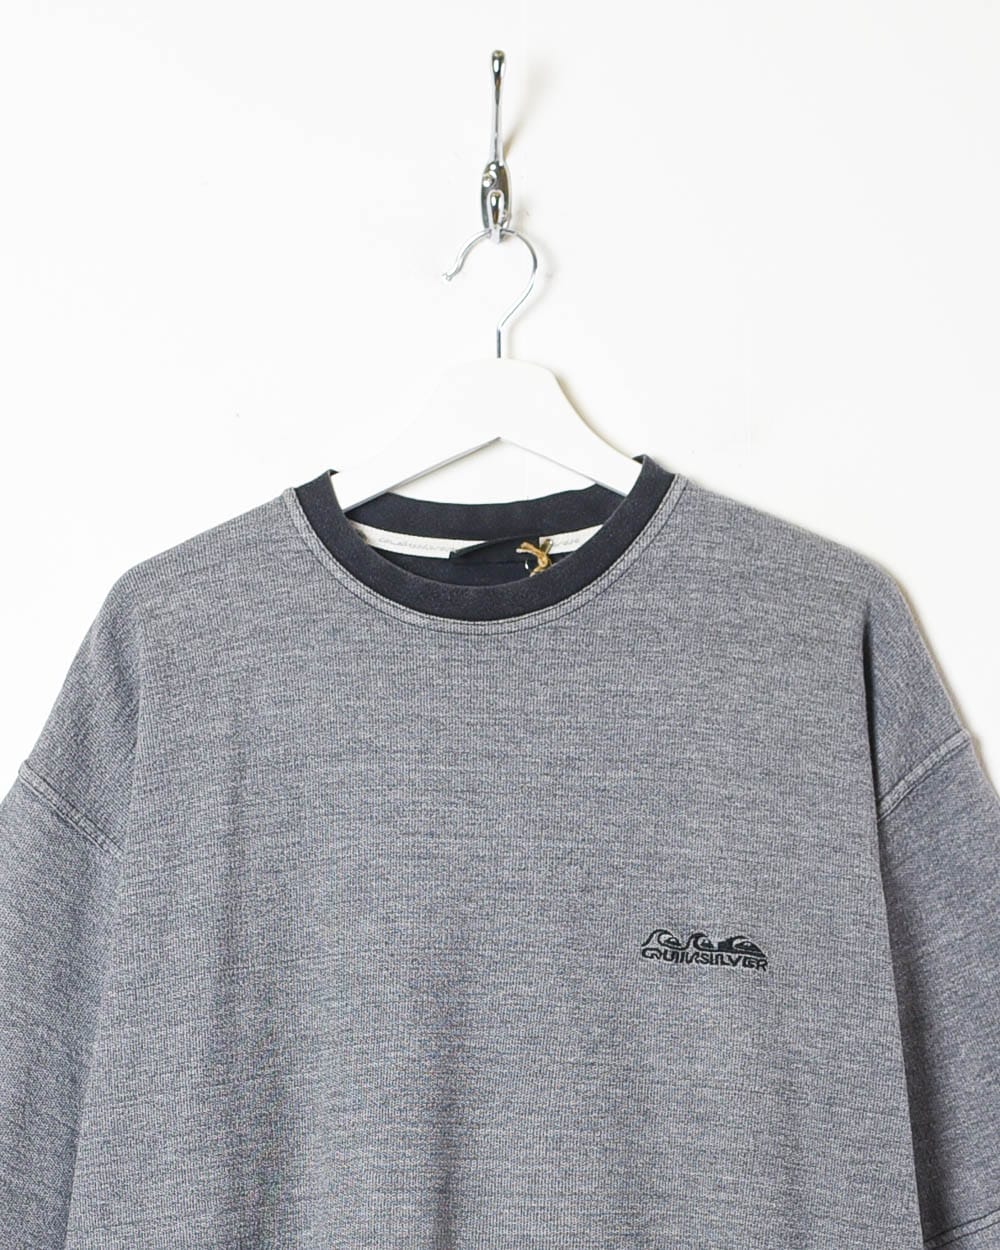 Grey Quiksilver T-Shirt - X-Large